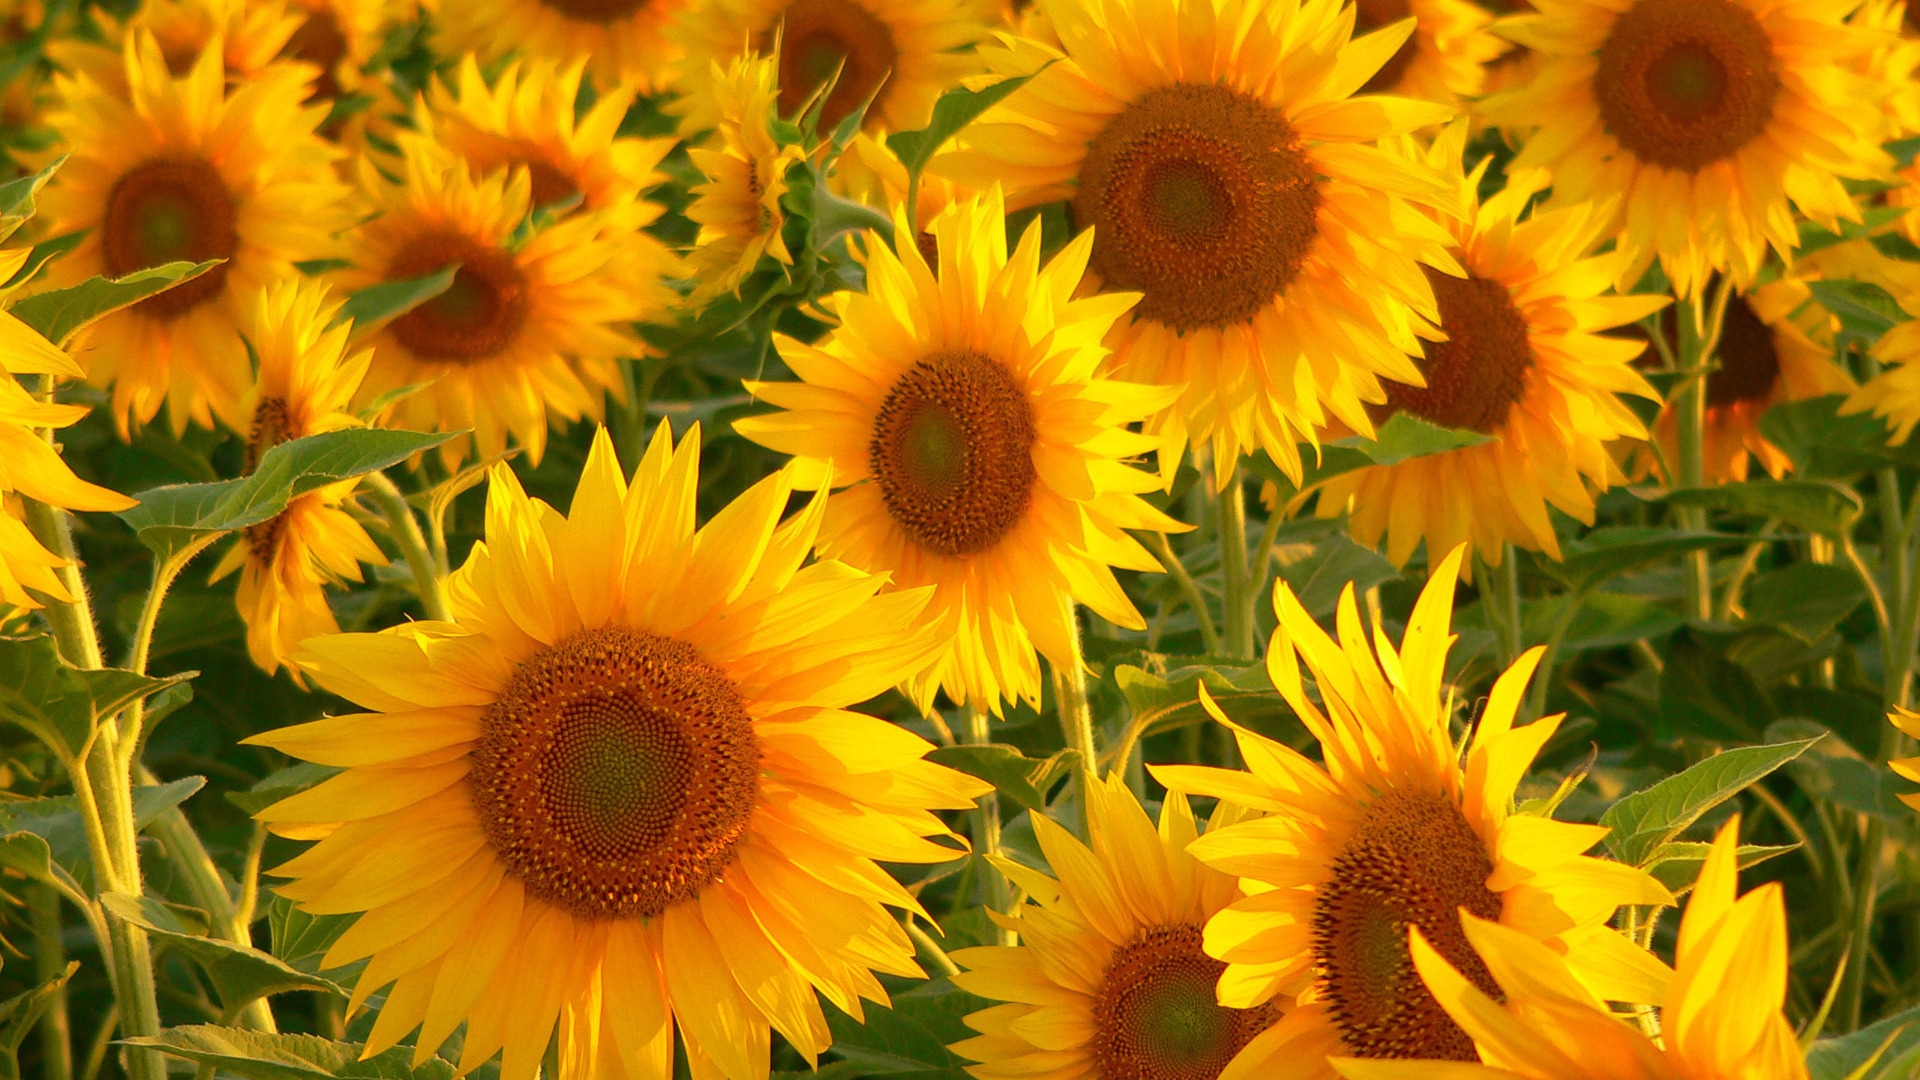 Sunflowers for 1920 x 1080 HDTV 1080p resolution